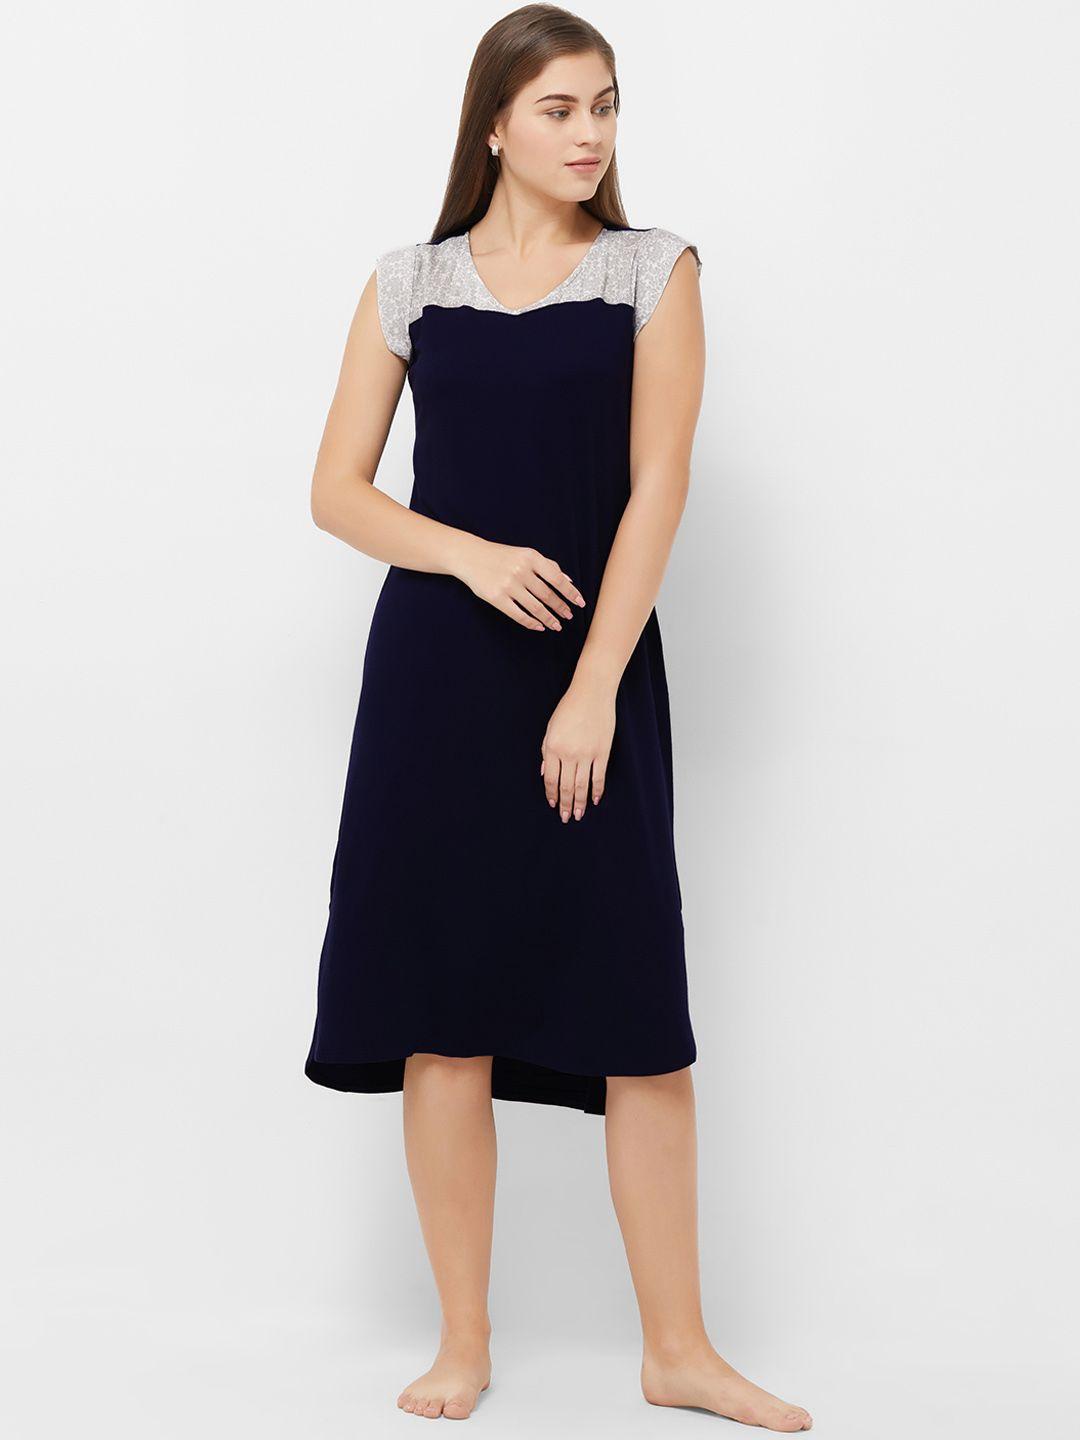 soie-navy-blue-&-off-white-printed-nightdress